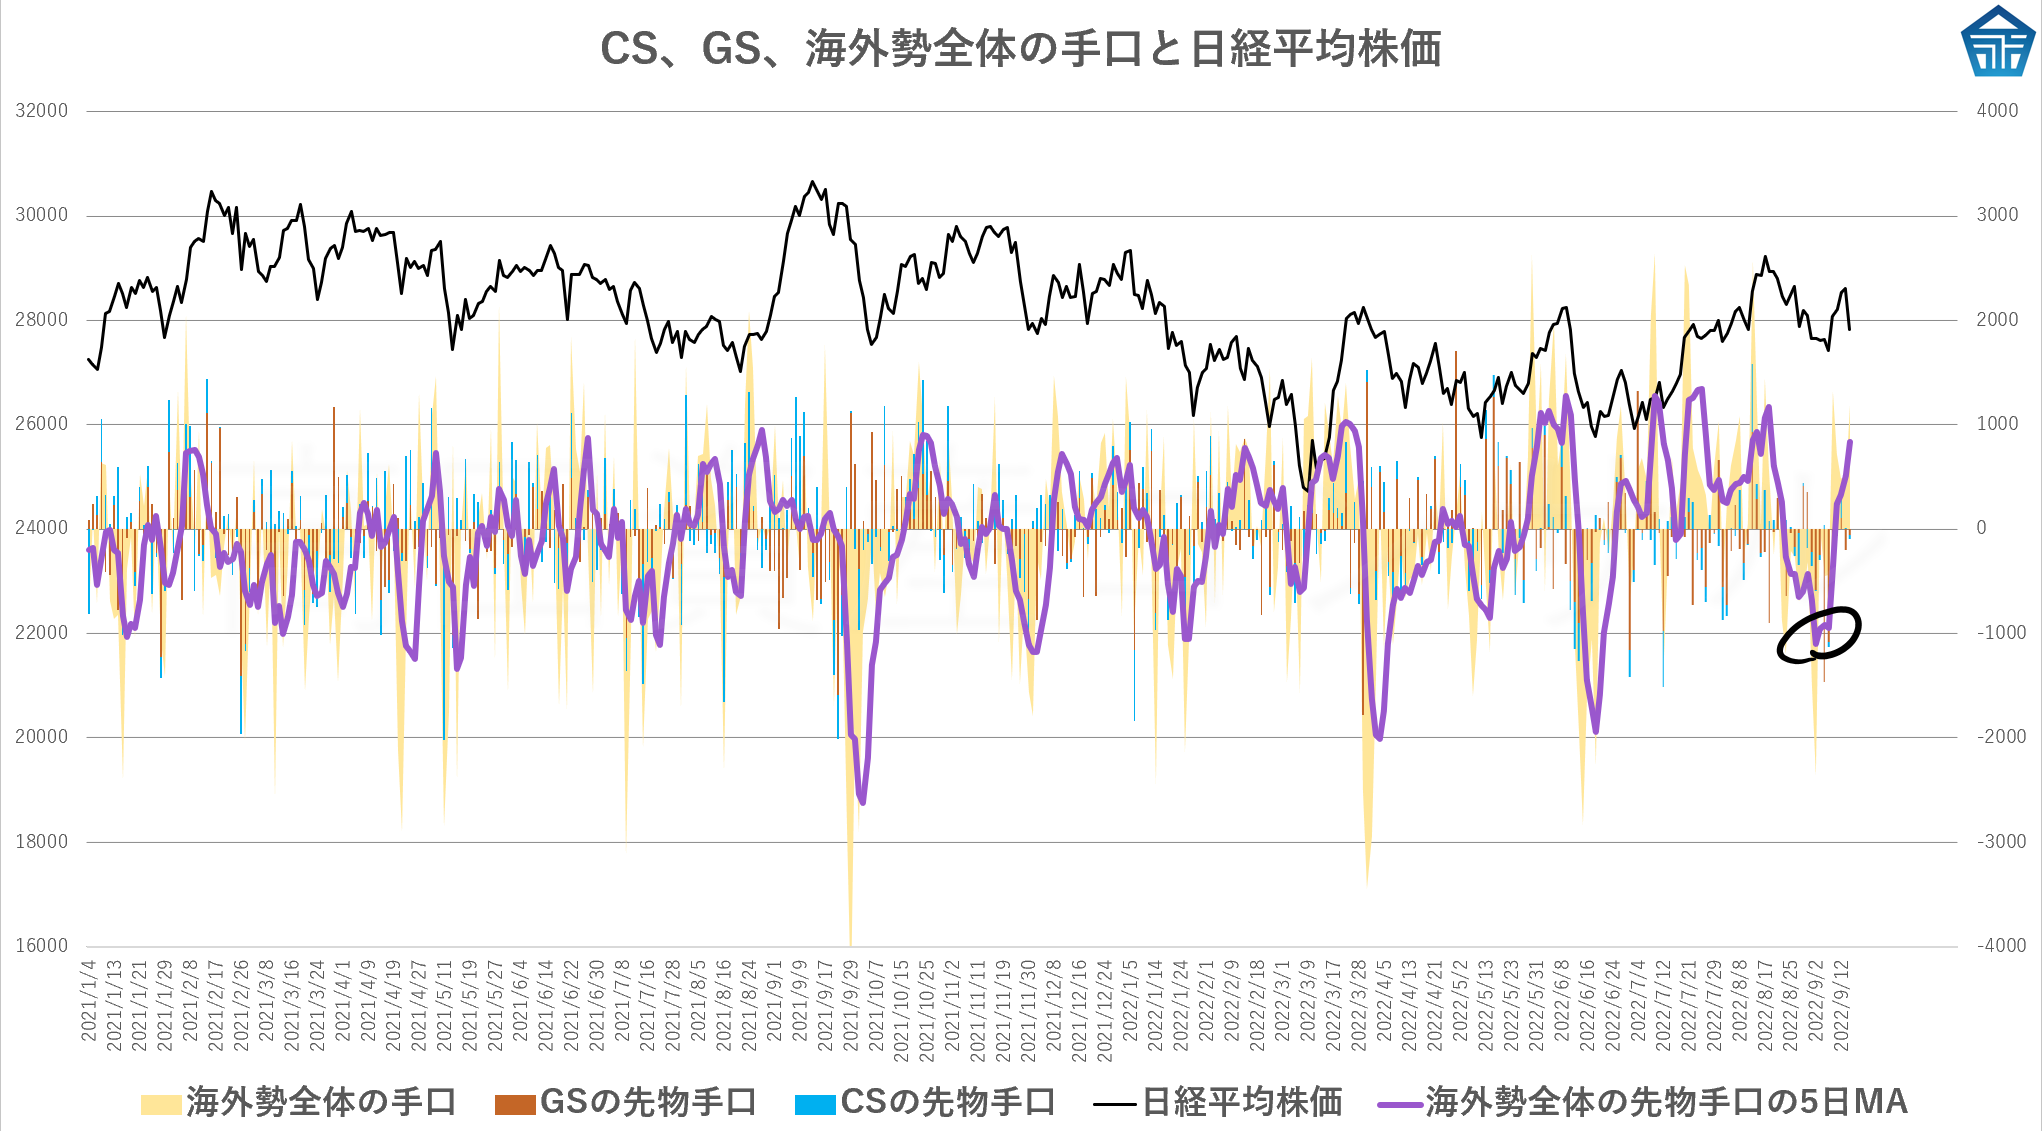 CS、GS、海外勢全体の手口と日経平均株価20220914sejhsjhee3a